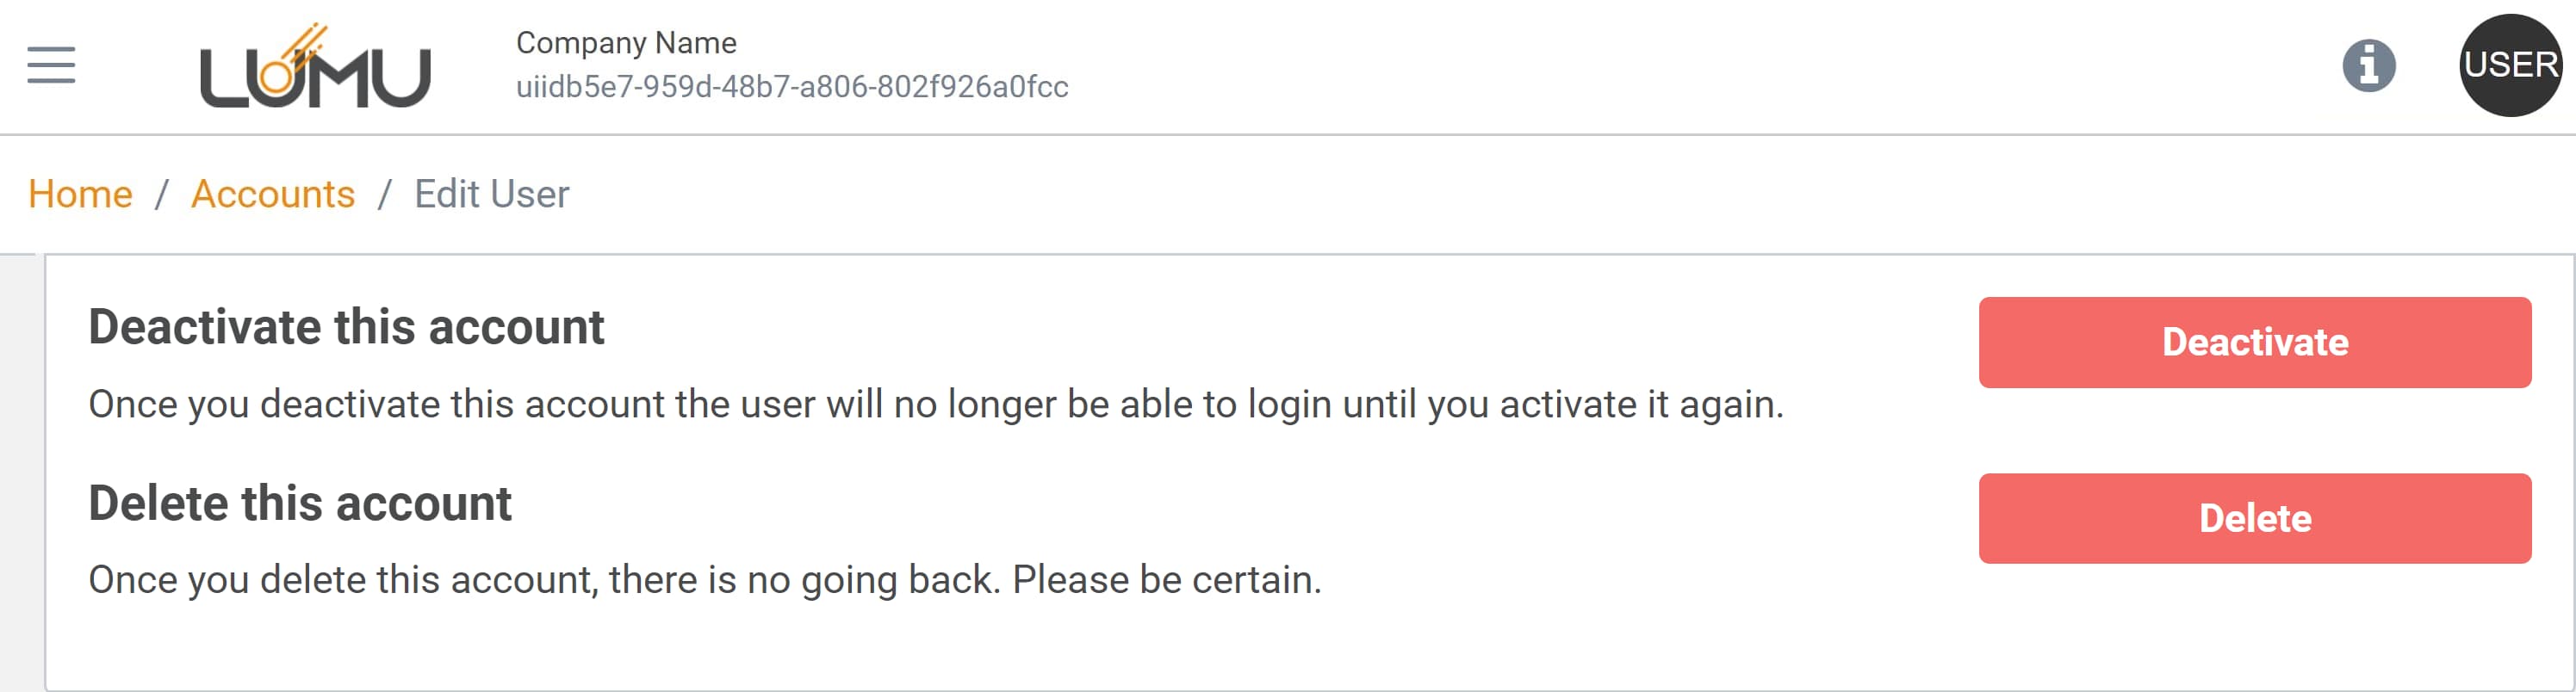 Deactivate or delete user account